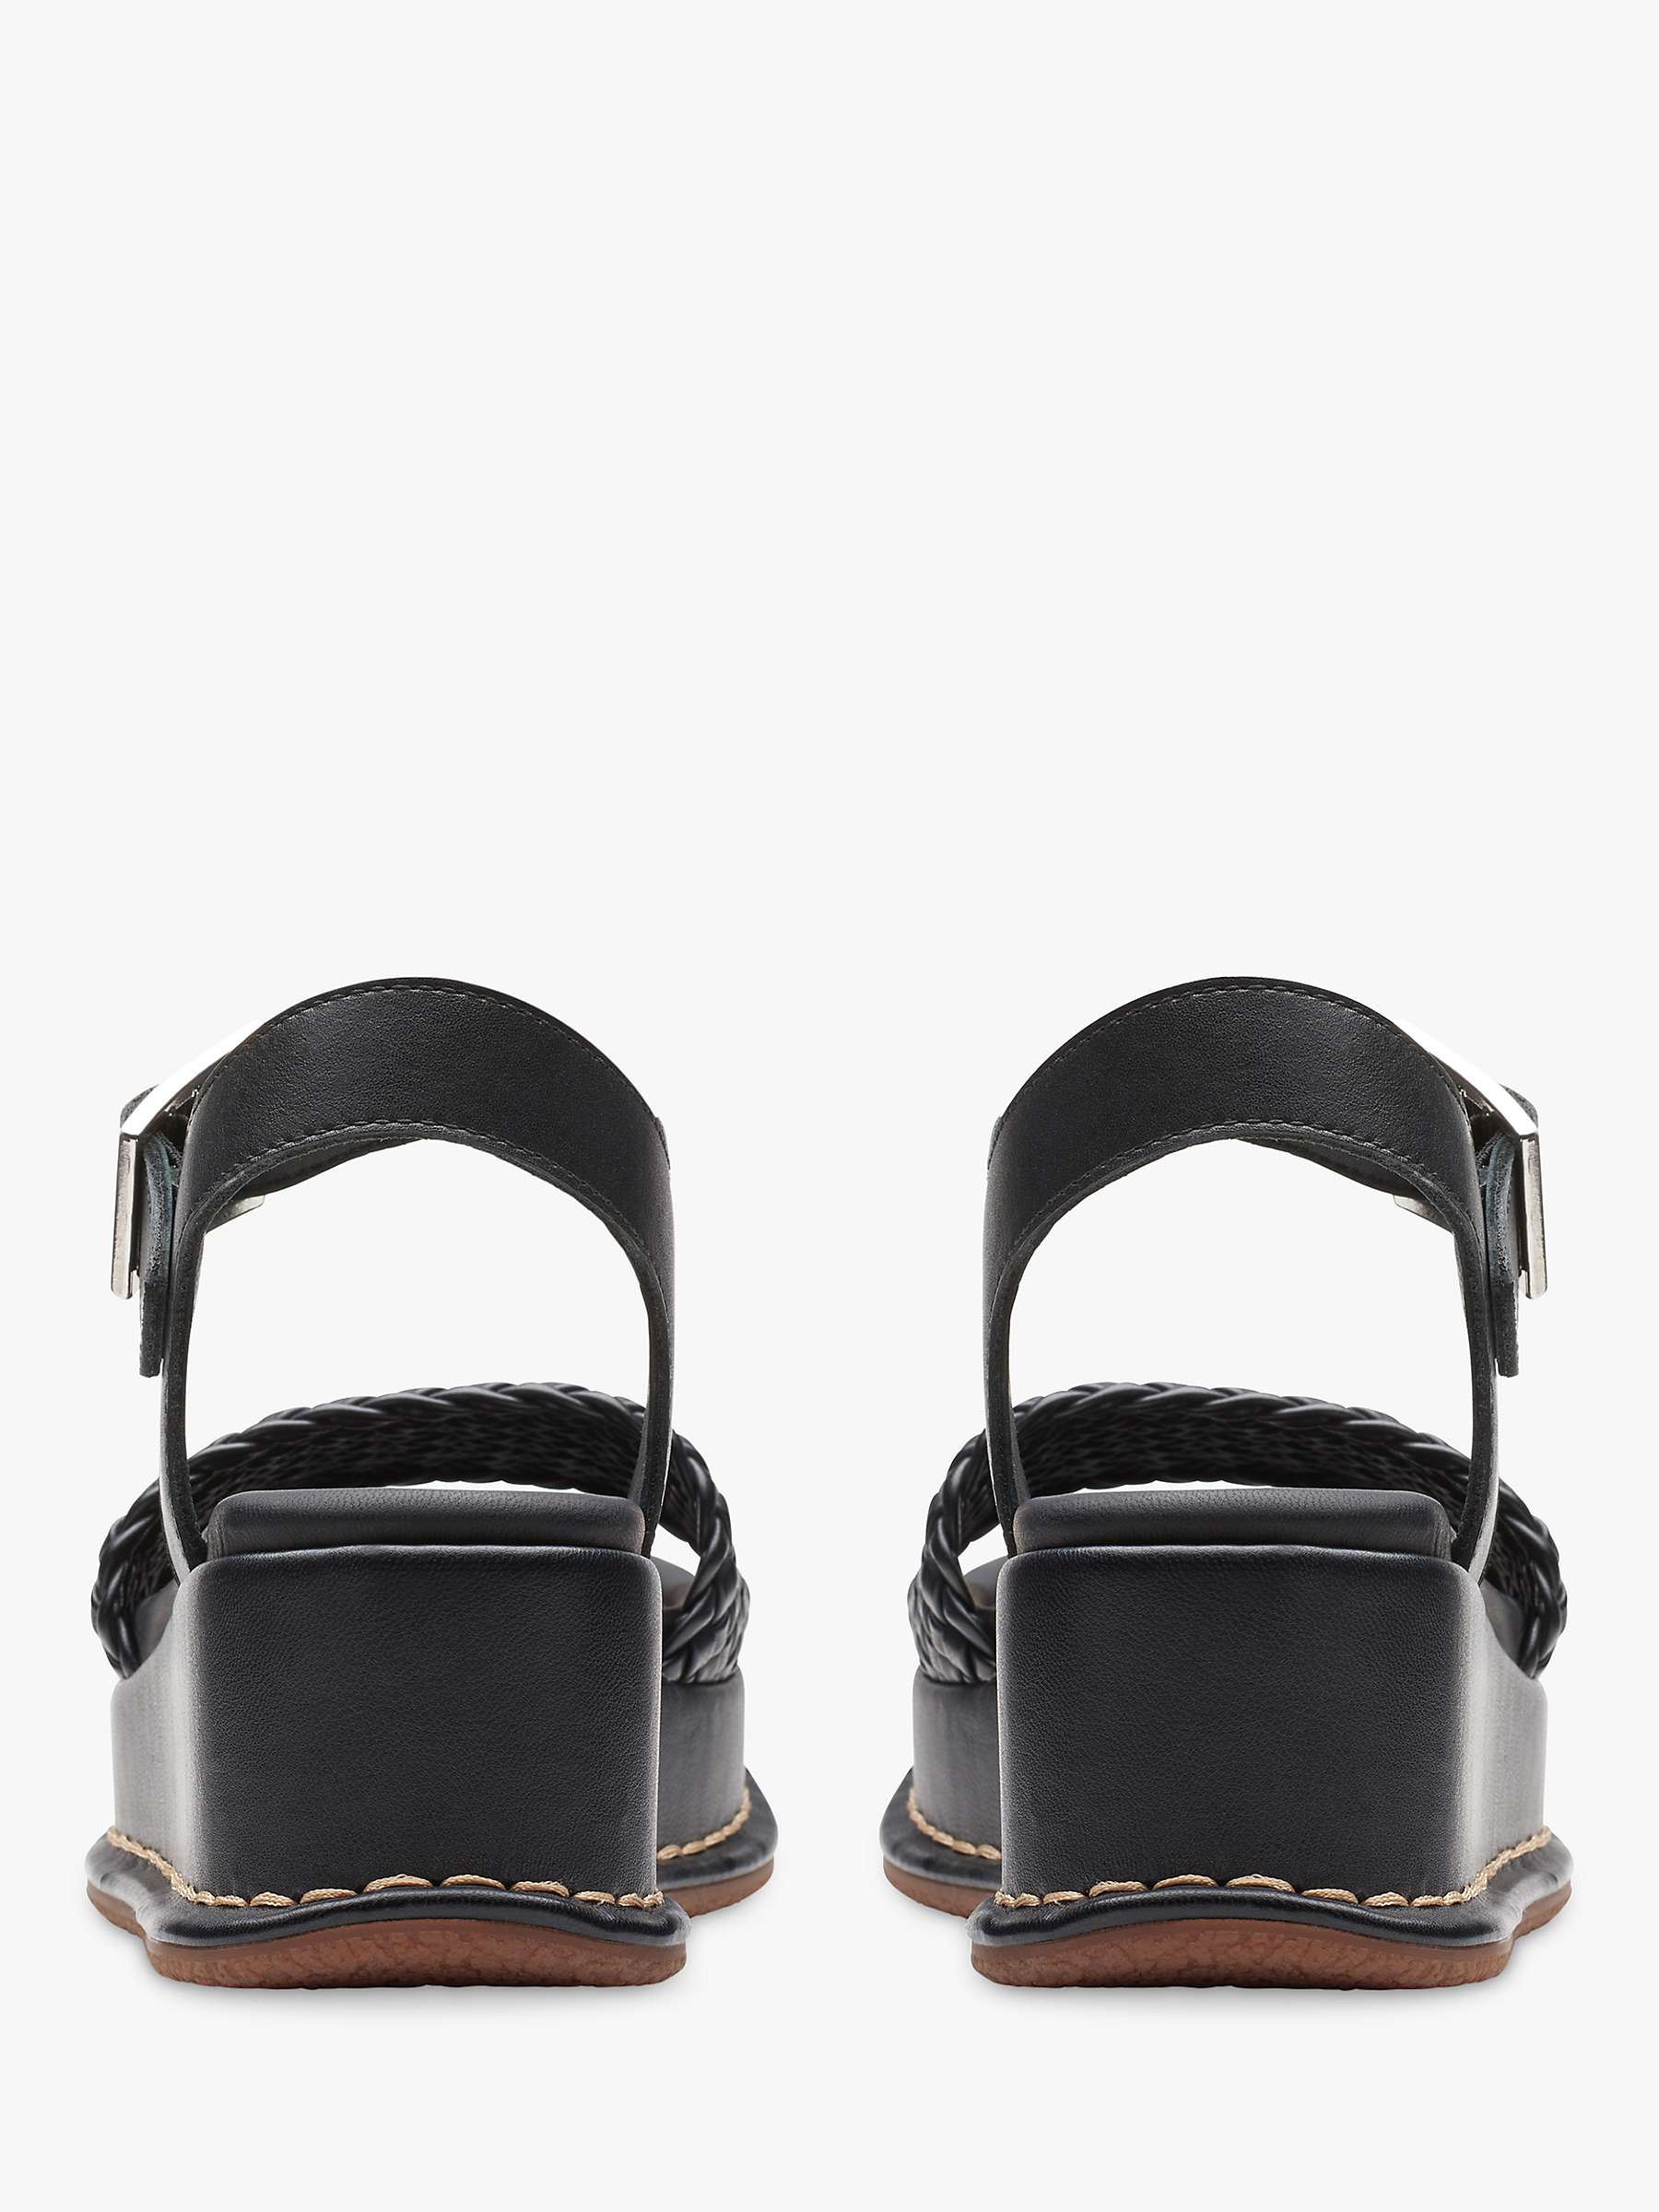 Buy Clarks Kimmei Bay Wedge Sandals Online at johnlewis.com